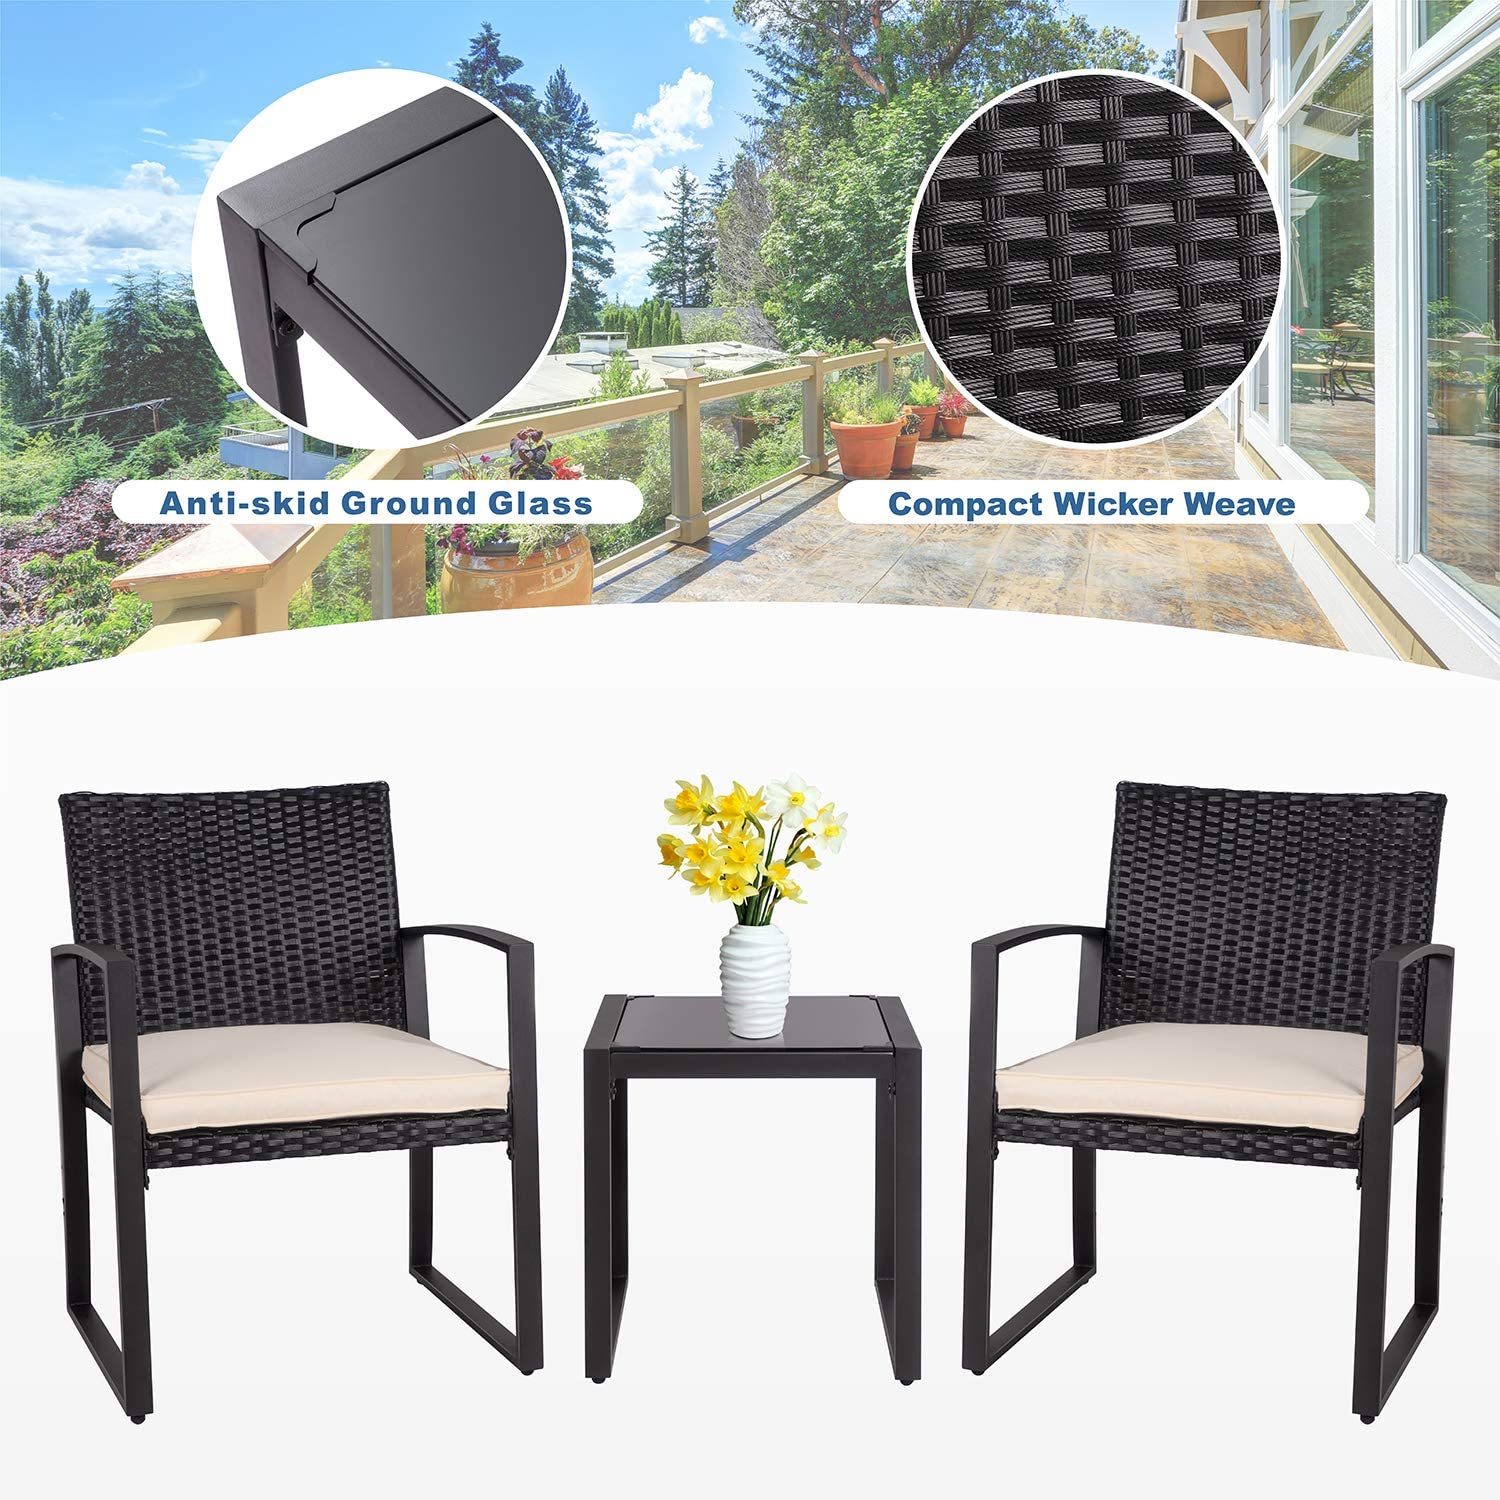 Shintenchi outdoor furniture. 15 Unique Furniture Designs for Outdoor Small Spaces - 2